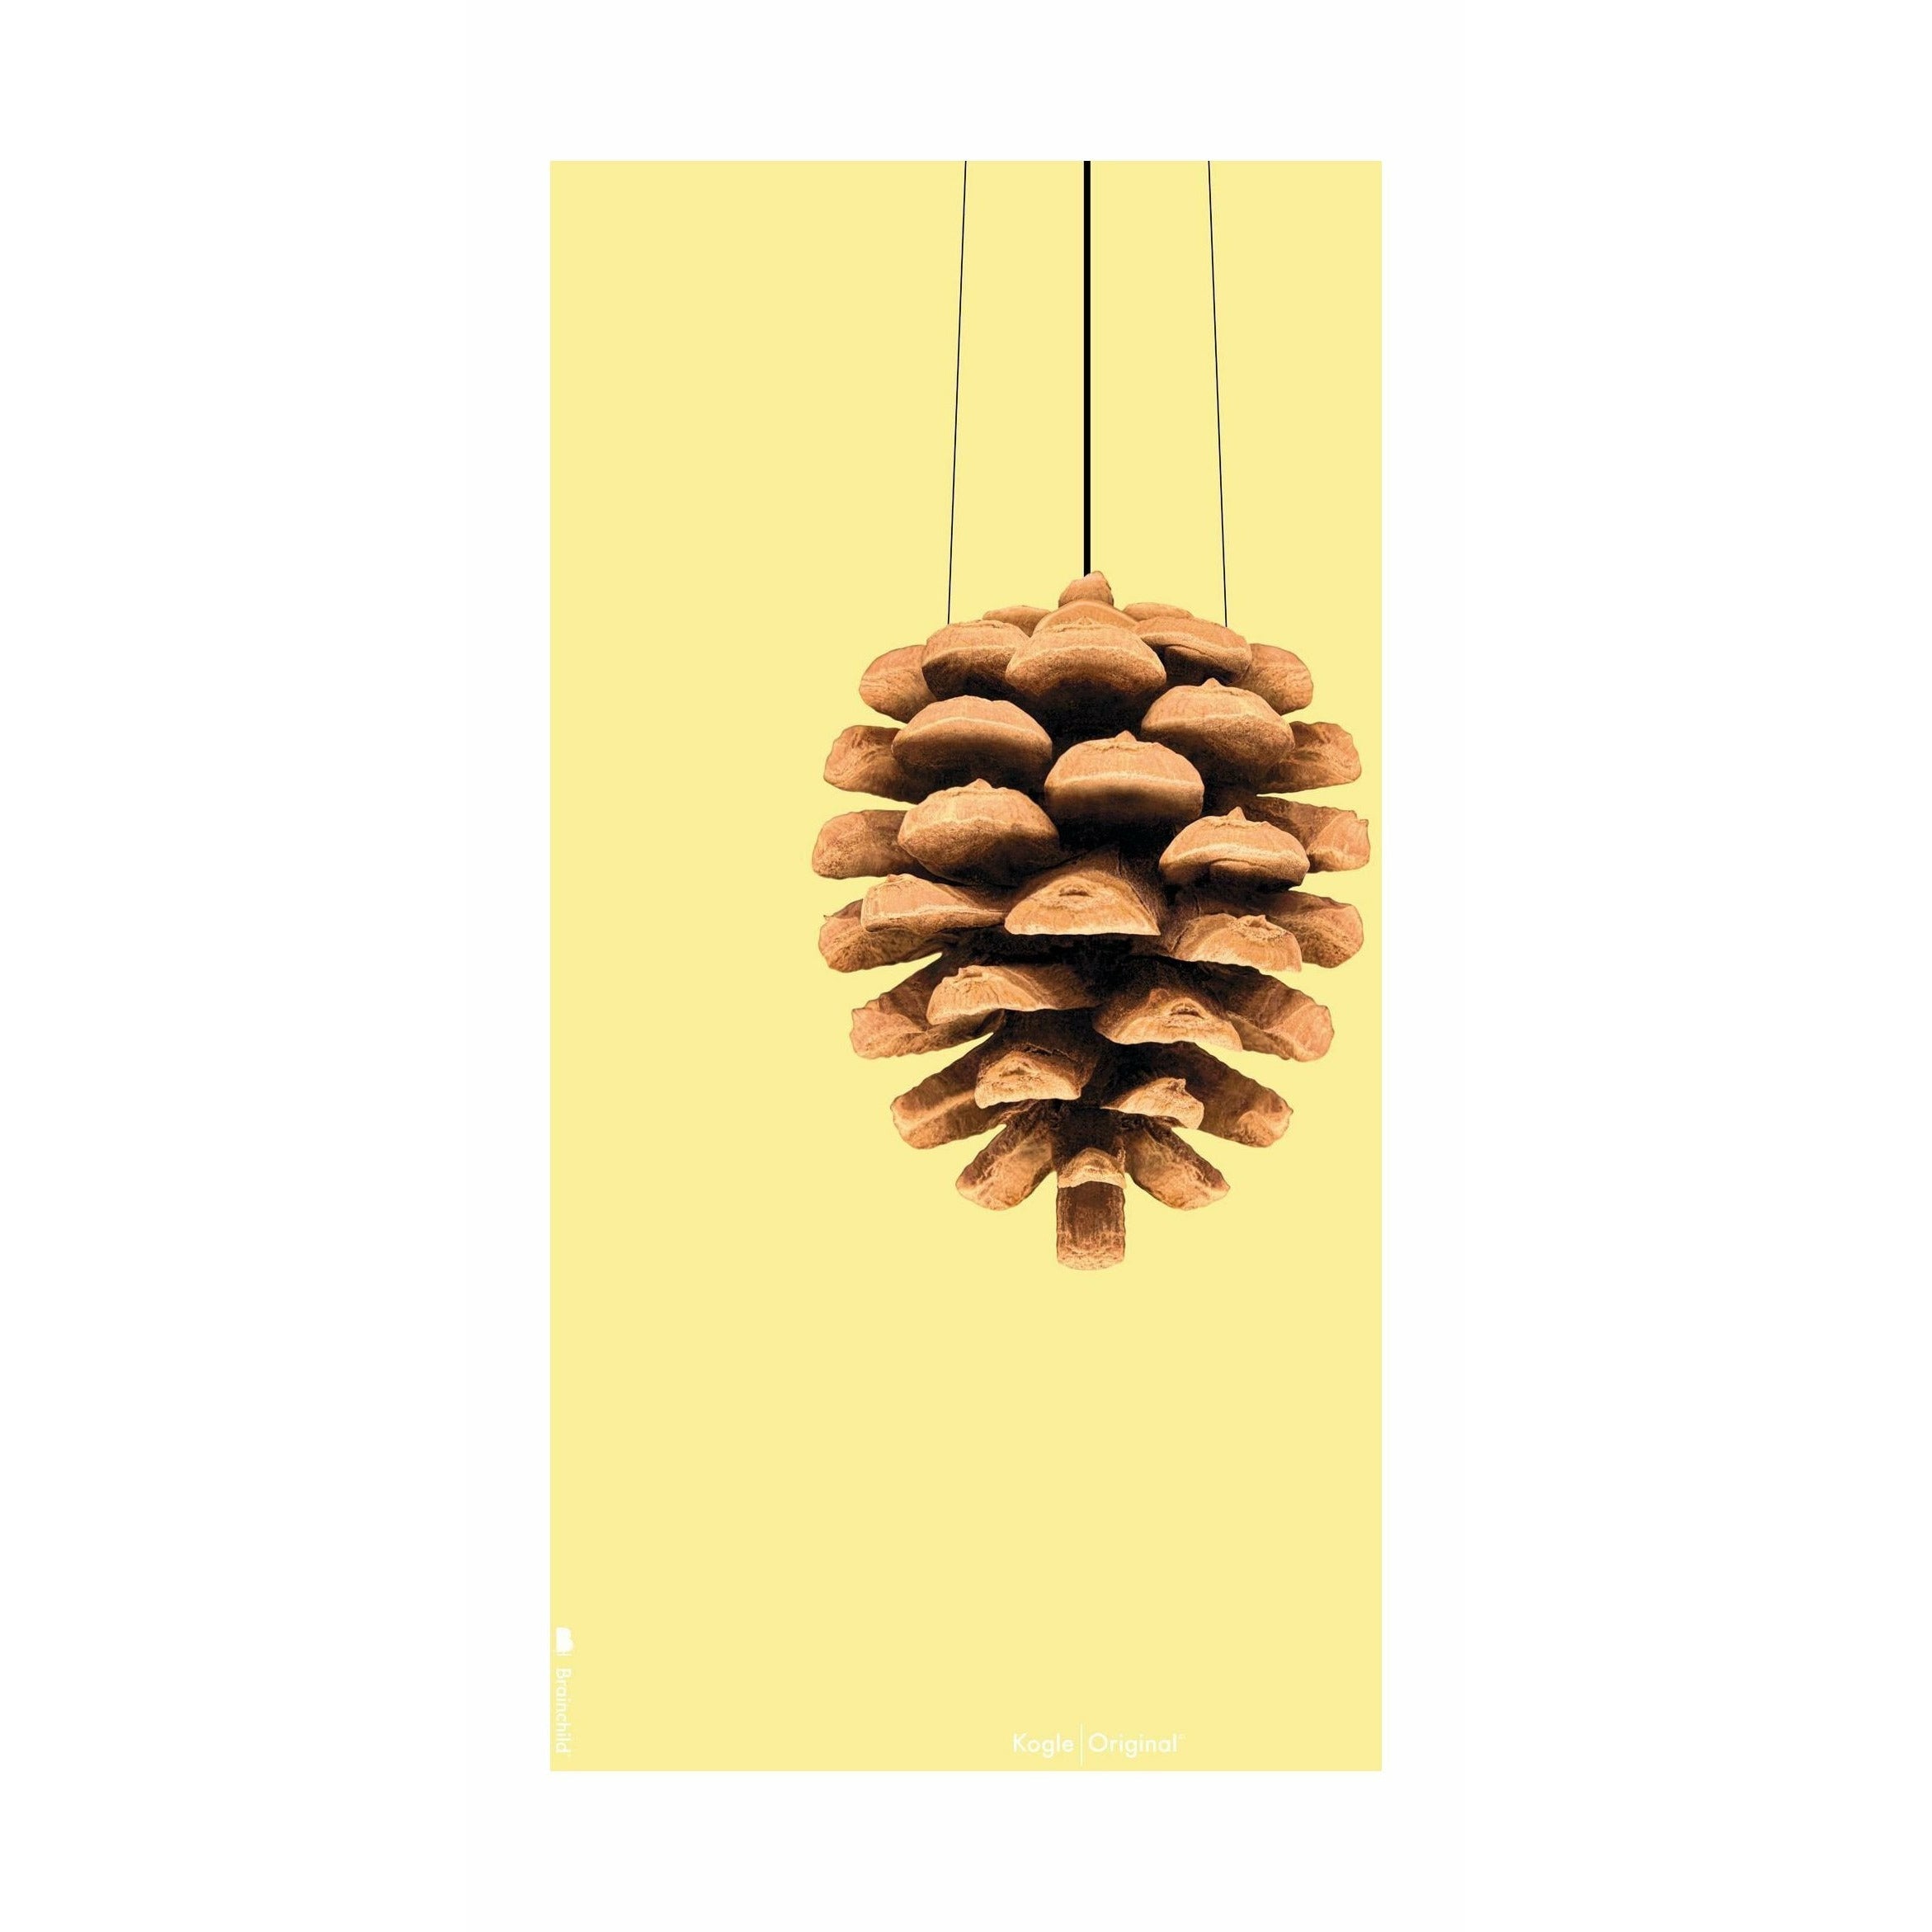 brainchild Pine Cone Classic Poster uden ramme 30 x40 cm, gul baggrund